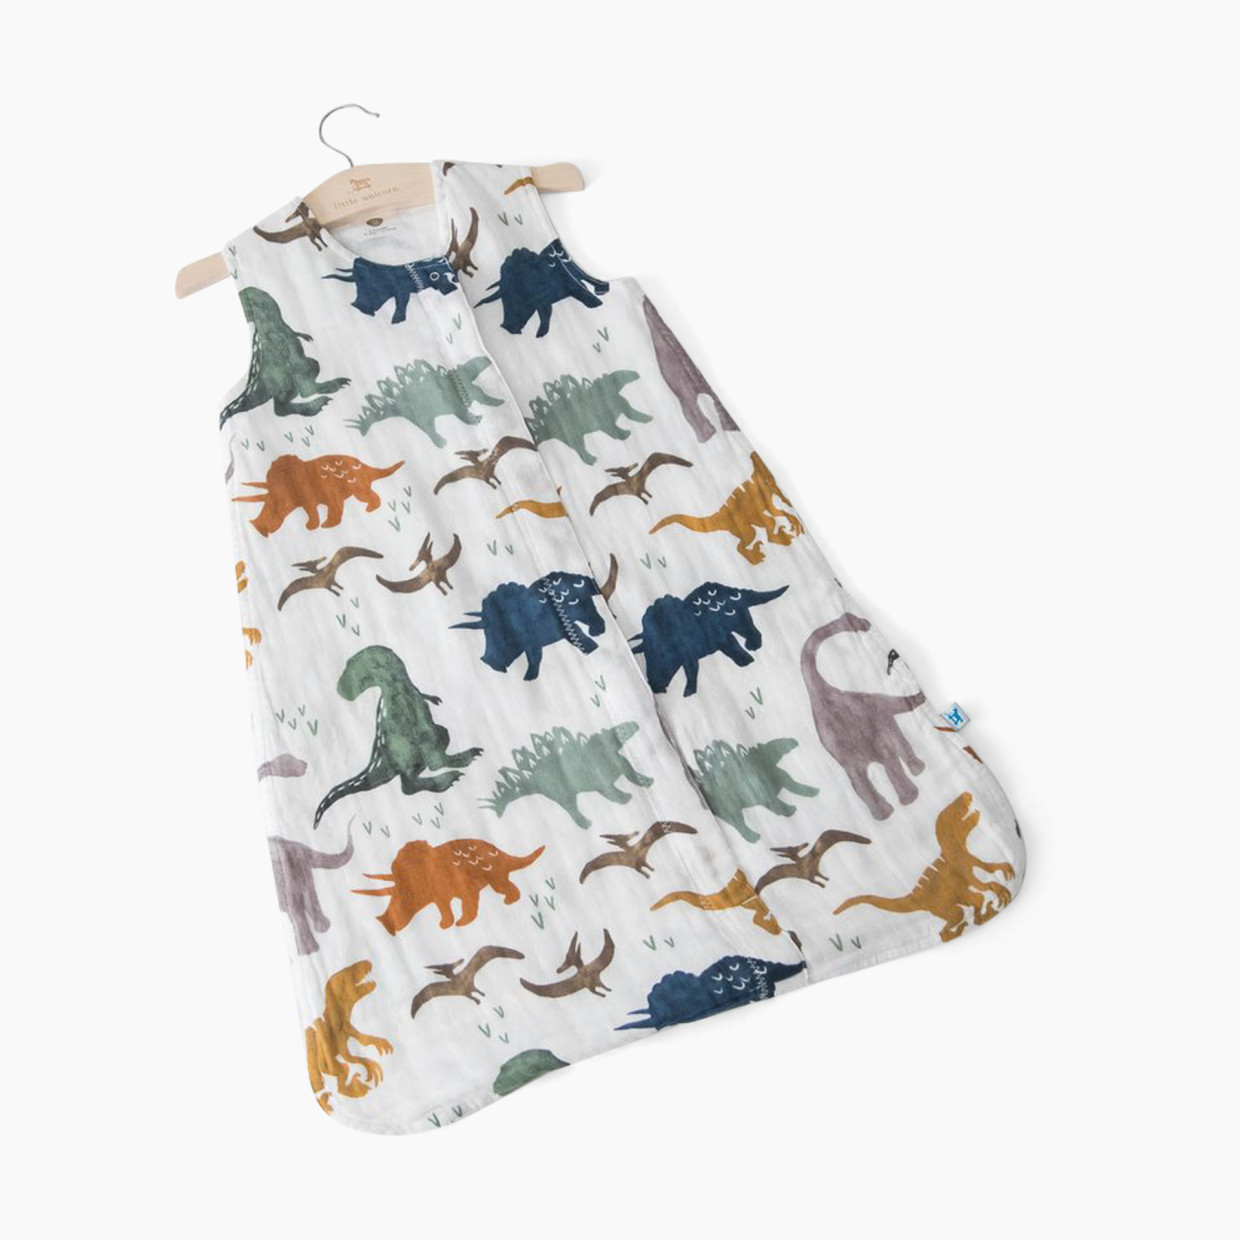 Little Unicorn Cotton Muslin Sleep Bag - Dino Friends, Medium.